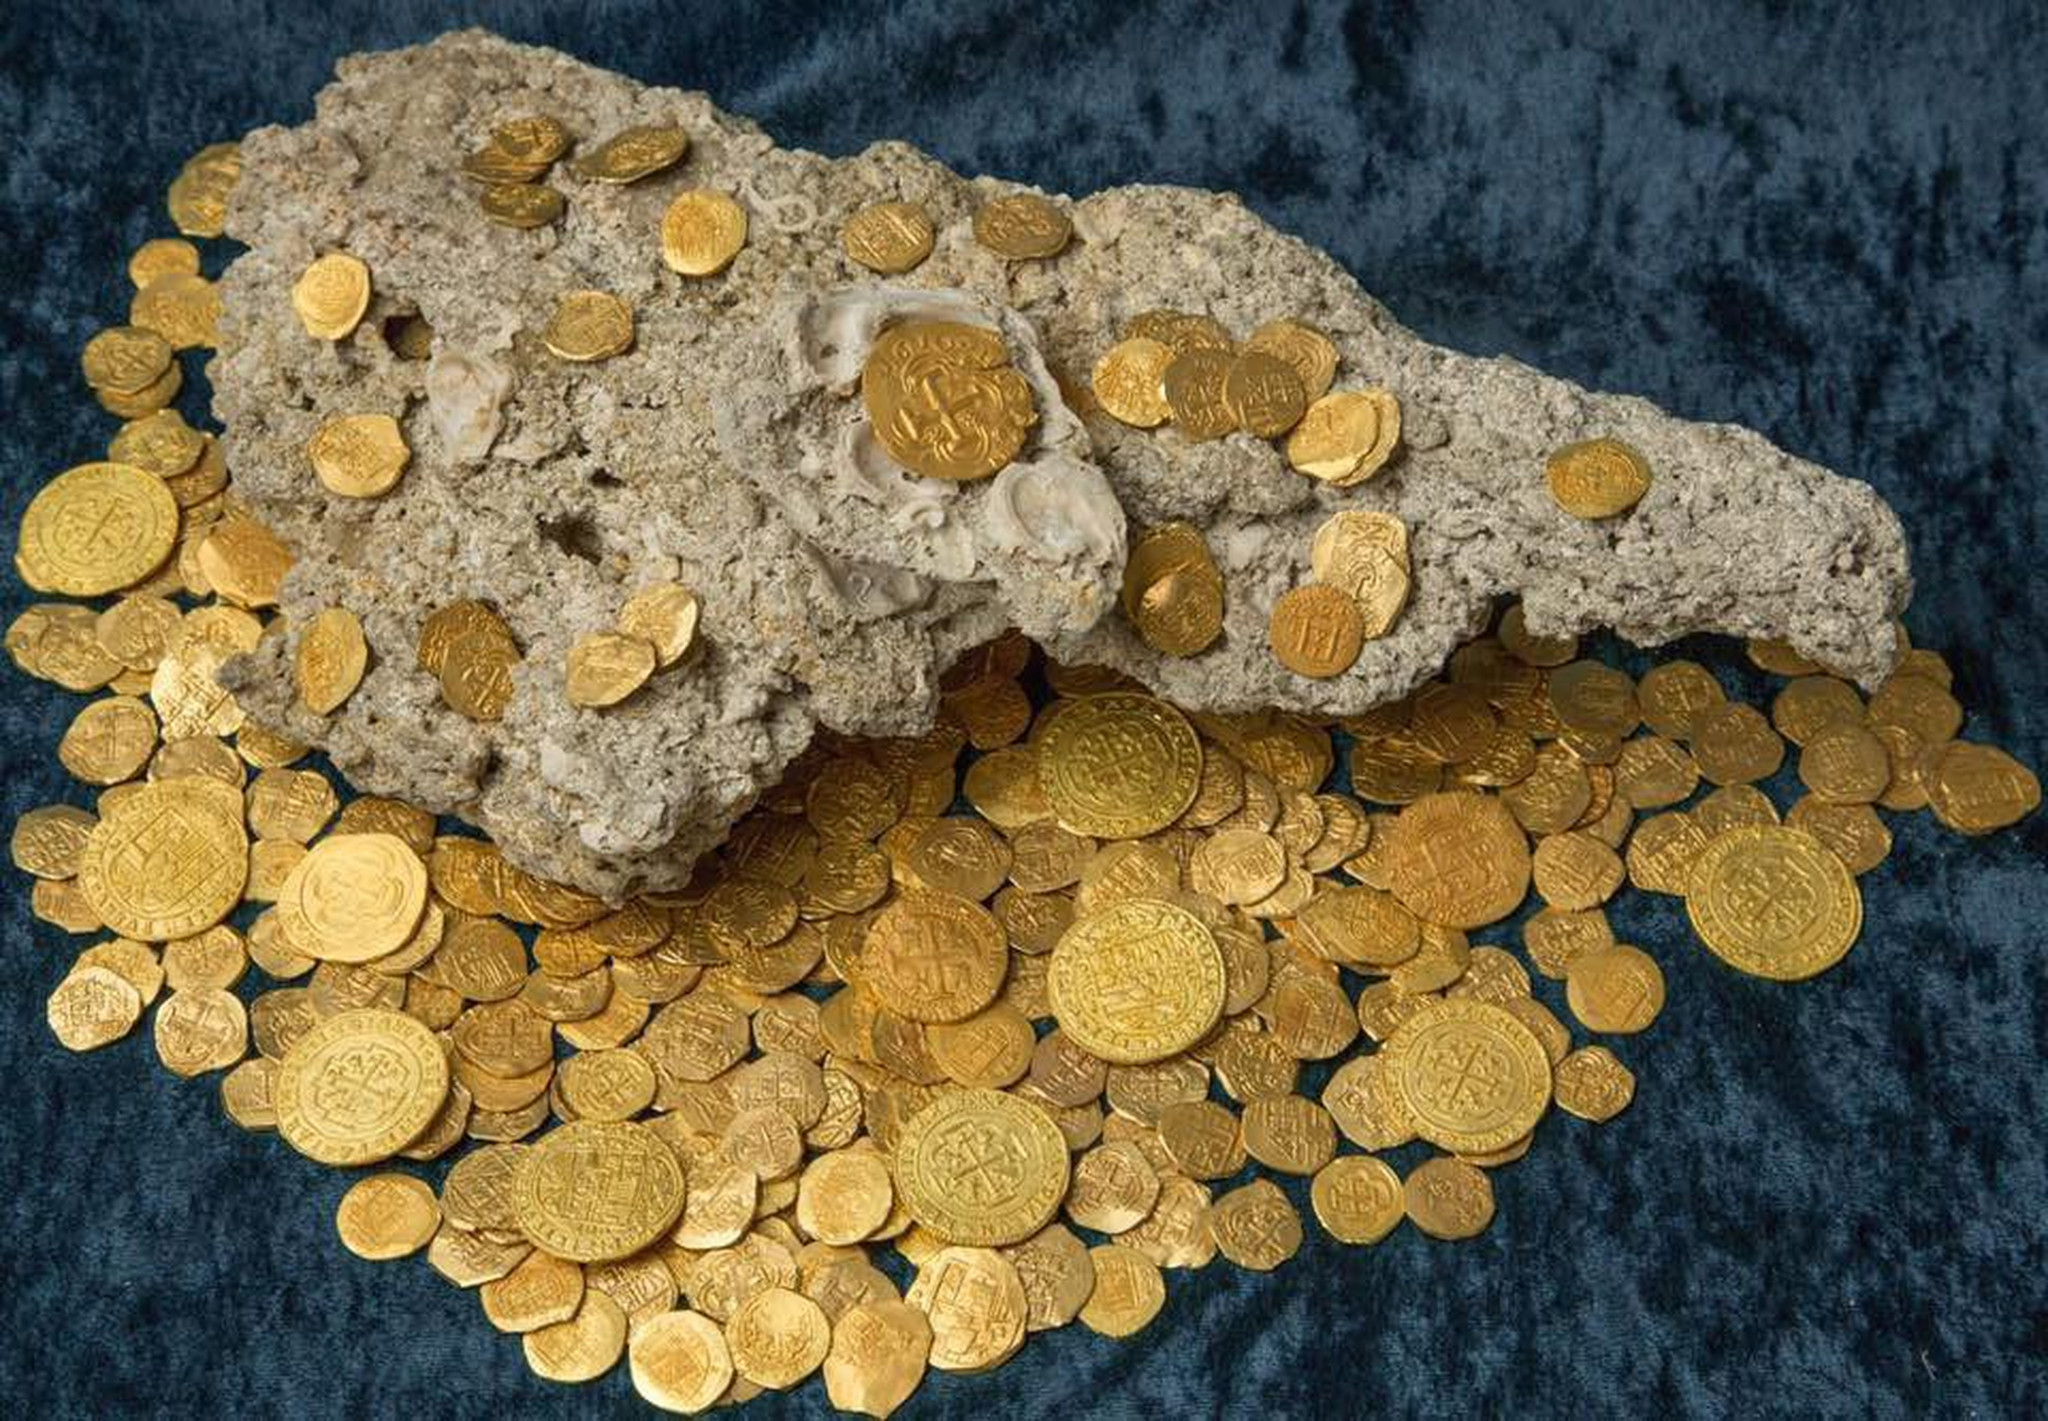 Sunken 1715 Spanish treasure ship yields $4.5 million in gold coins ...